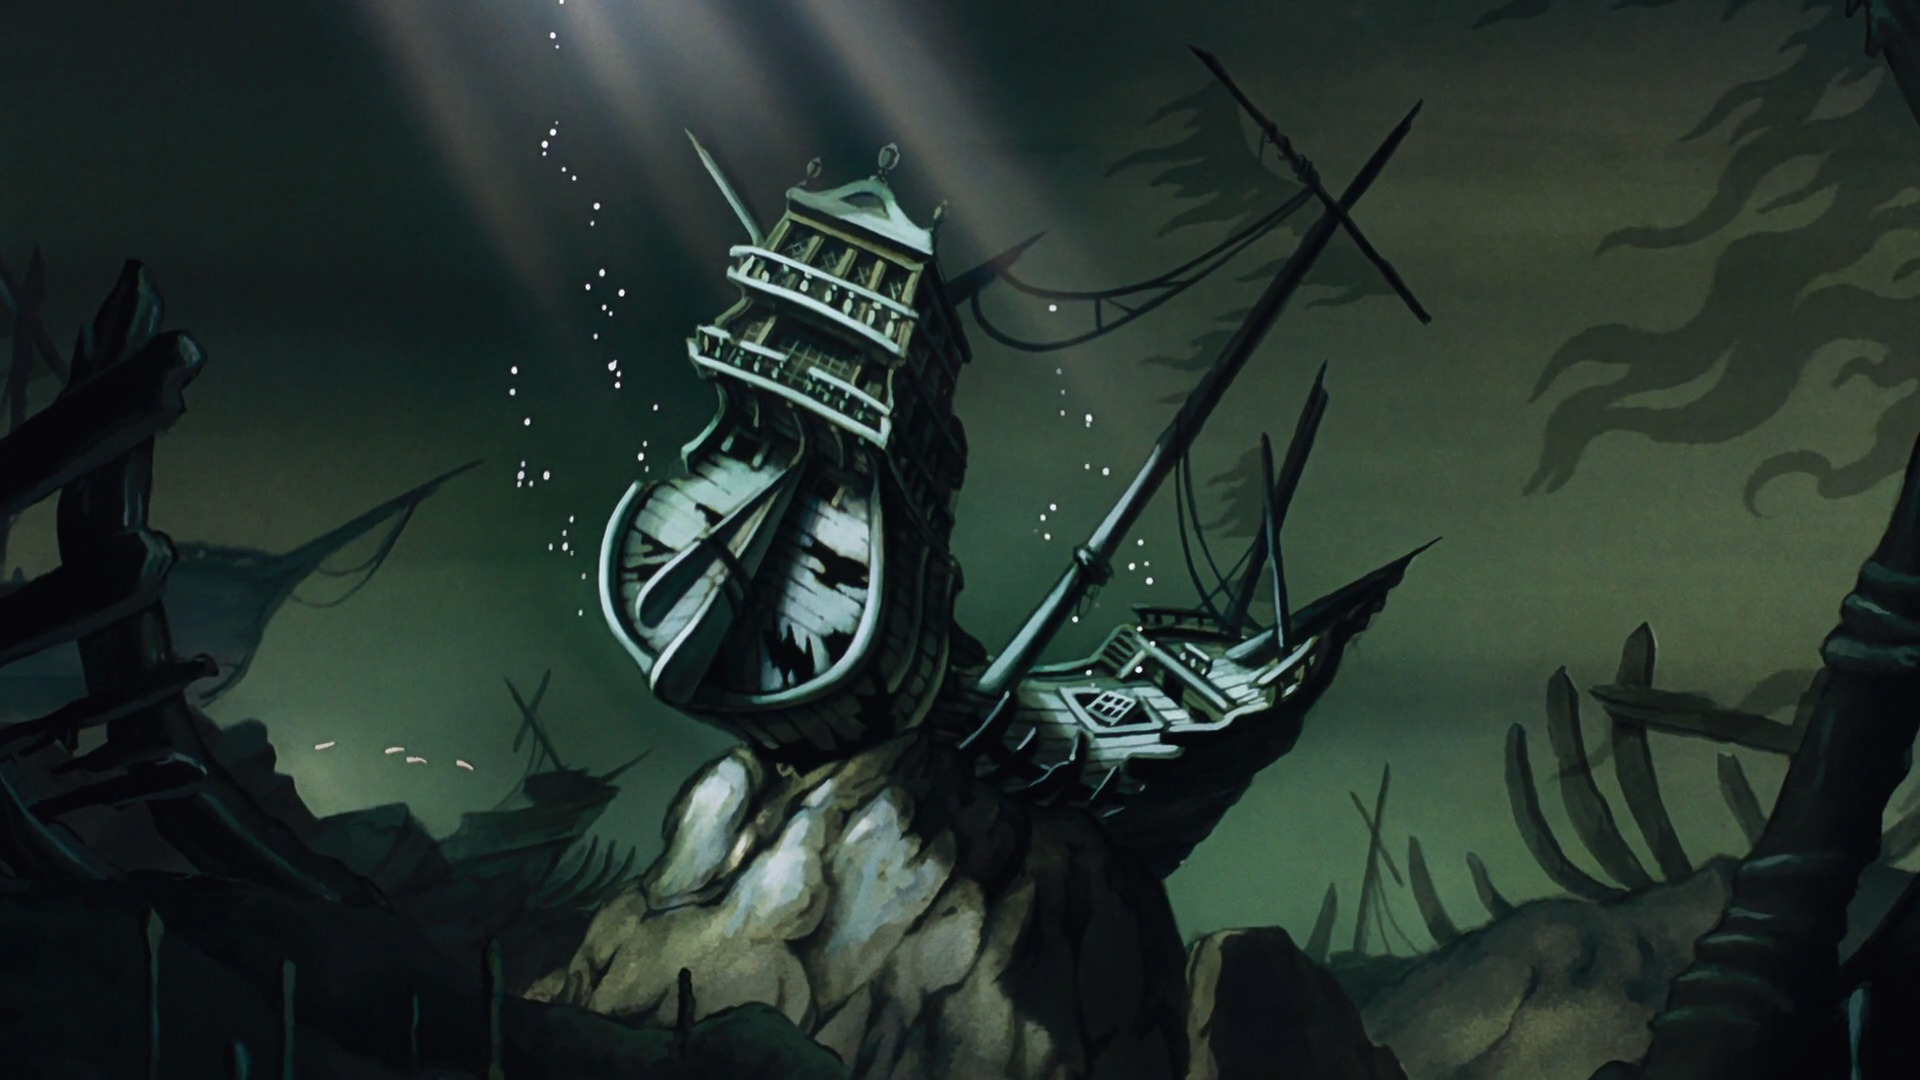 The Sunken Treasure Ship Disney Wiki Fandom Powered By Wikia